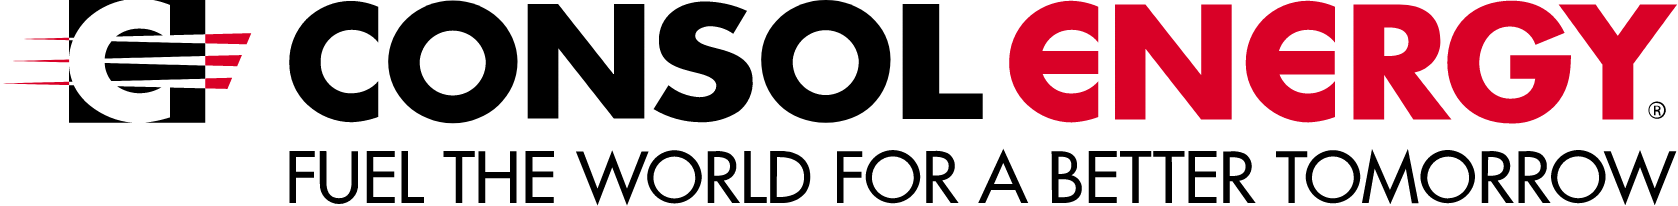 CONSOL Energy logo large (transparent PNG)